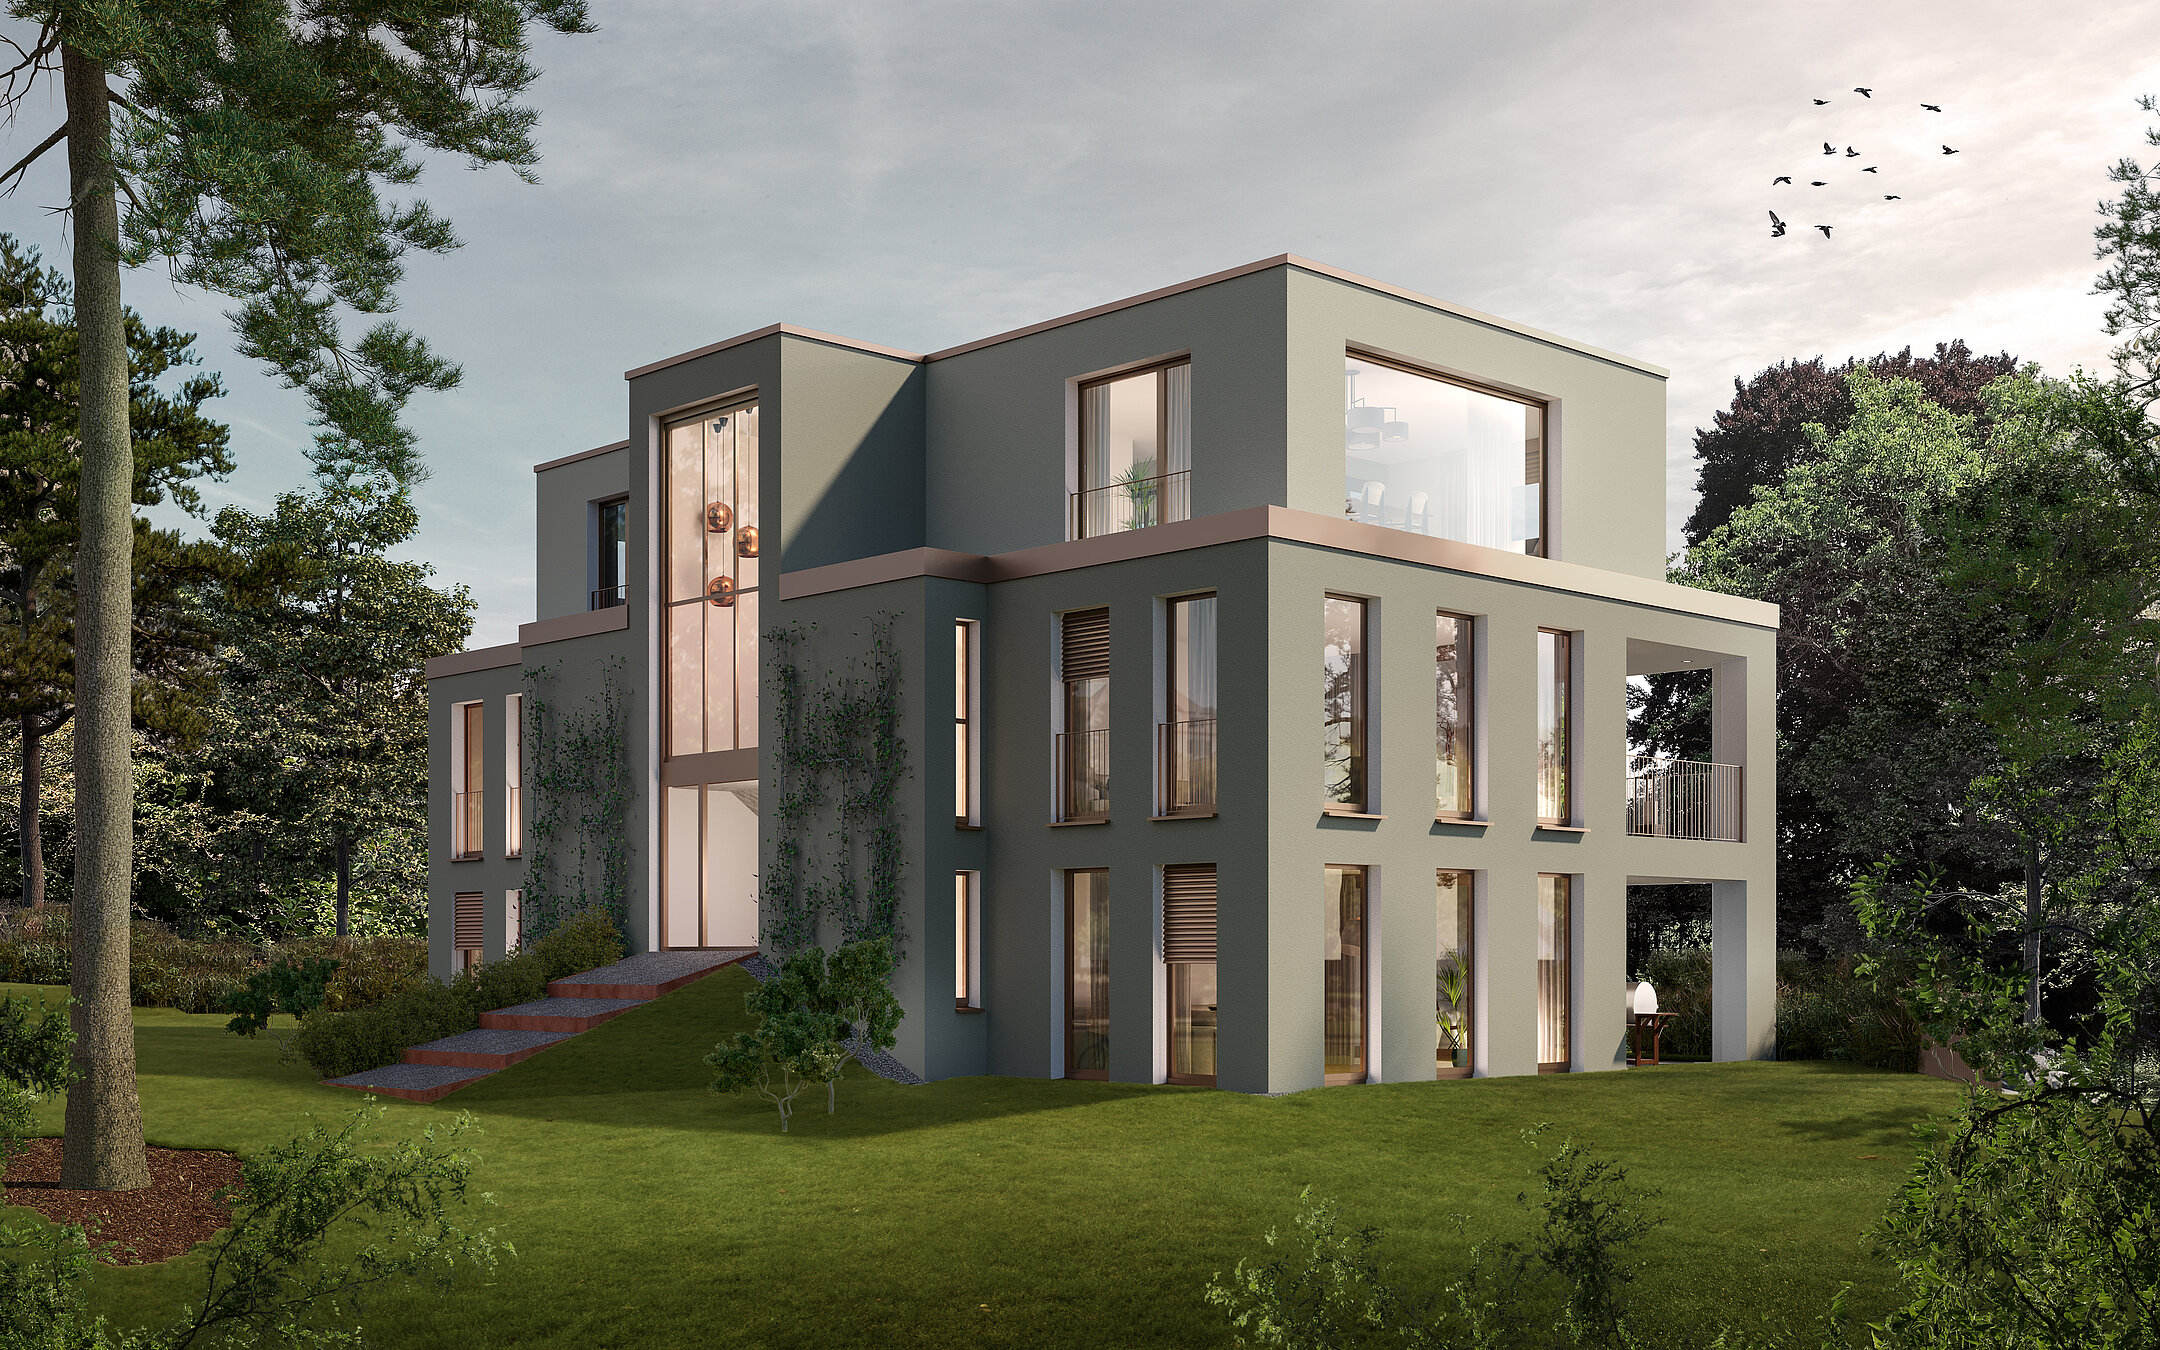 Mehrfamilienhaus HARMONIE im 3D-Rendering.